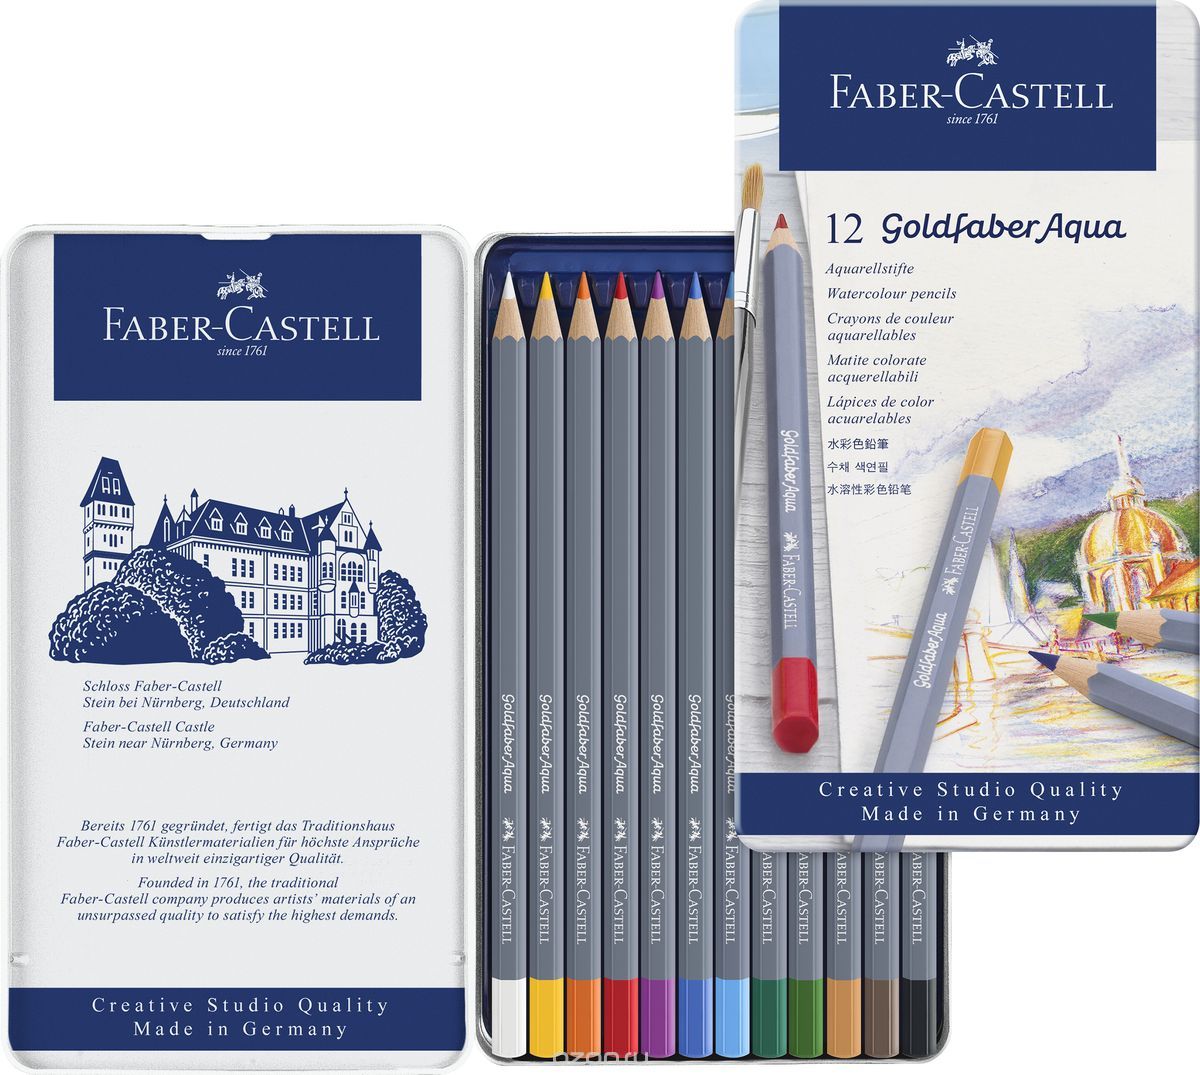 Faber-Castell     Goldfaber Aqua 12 